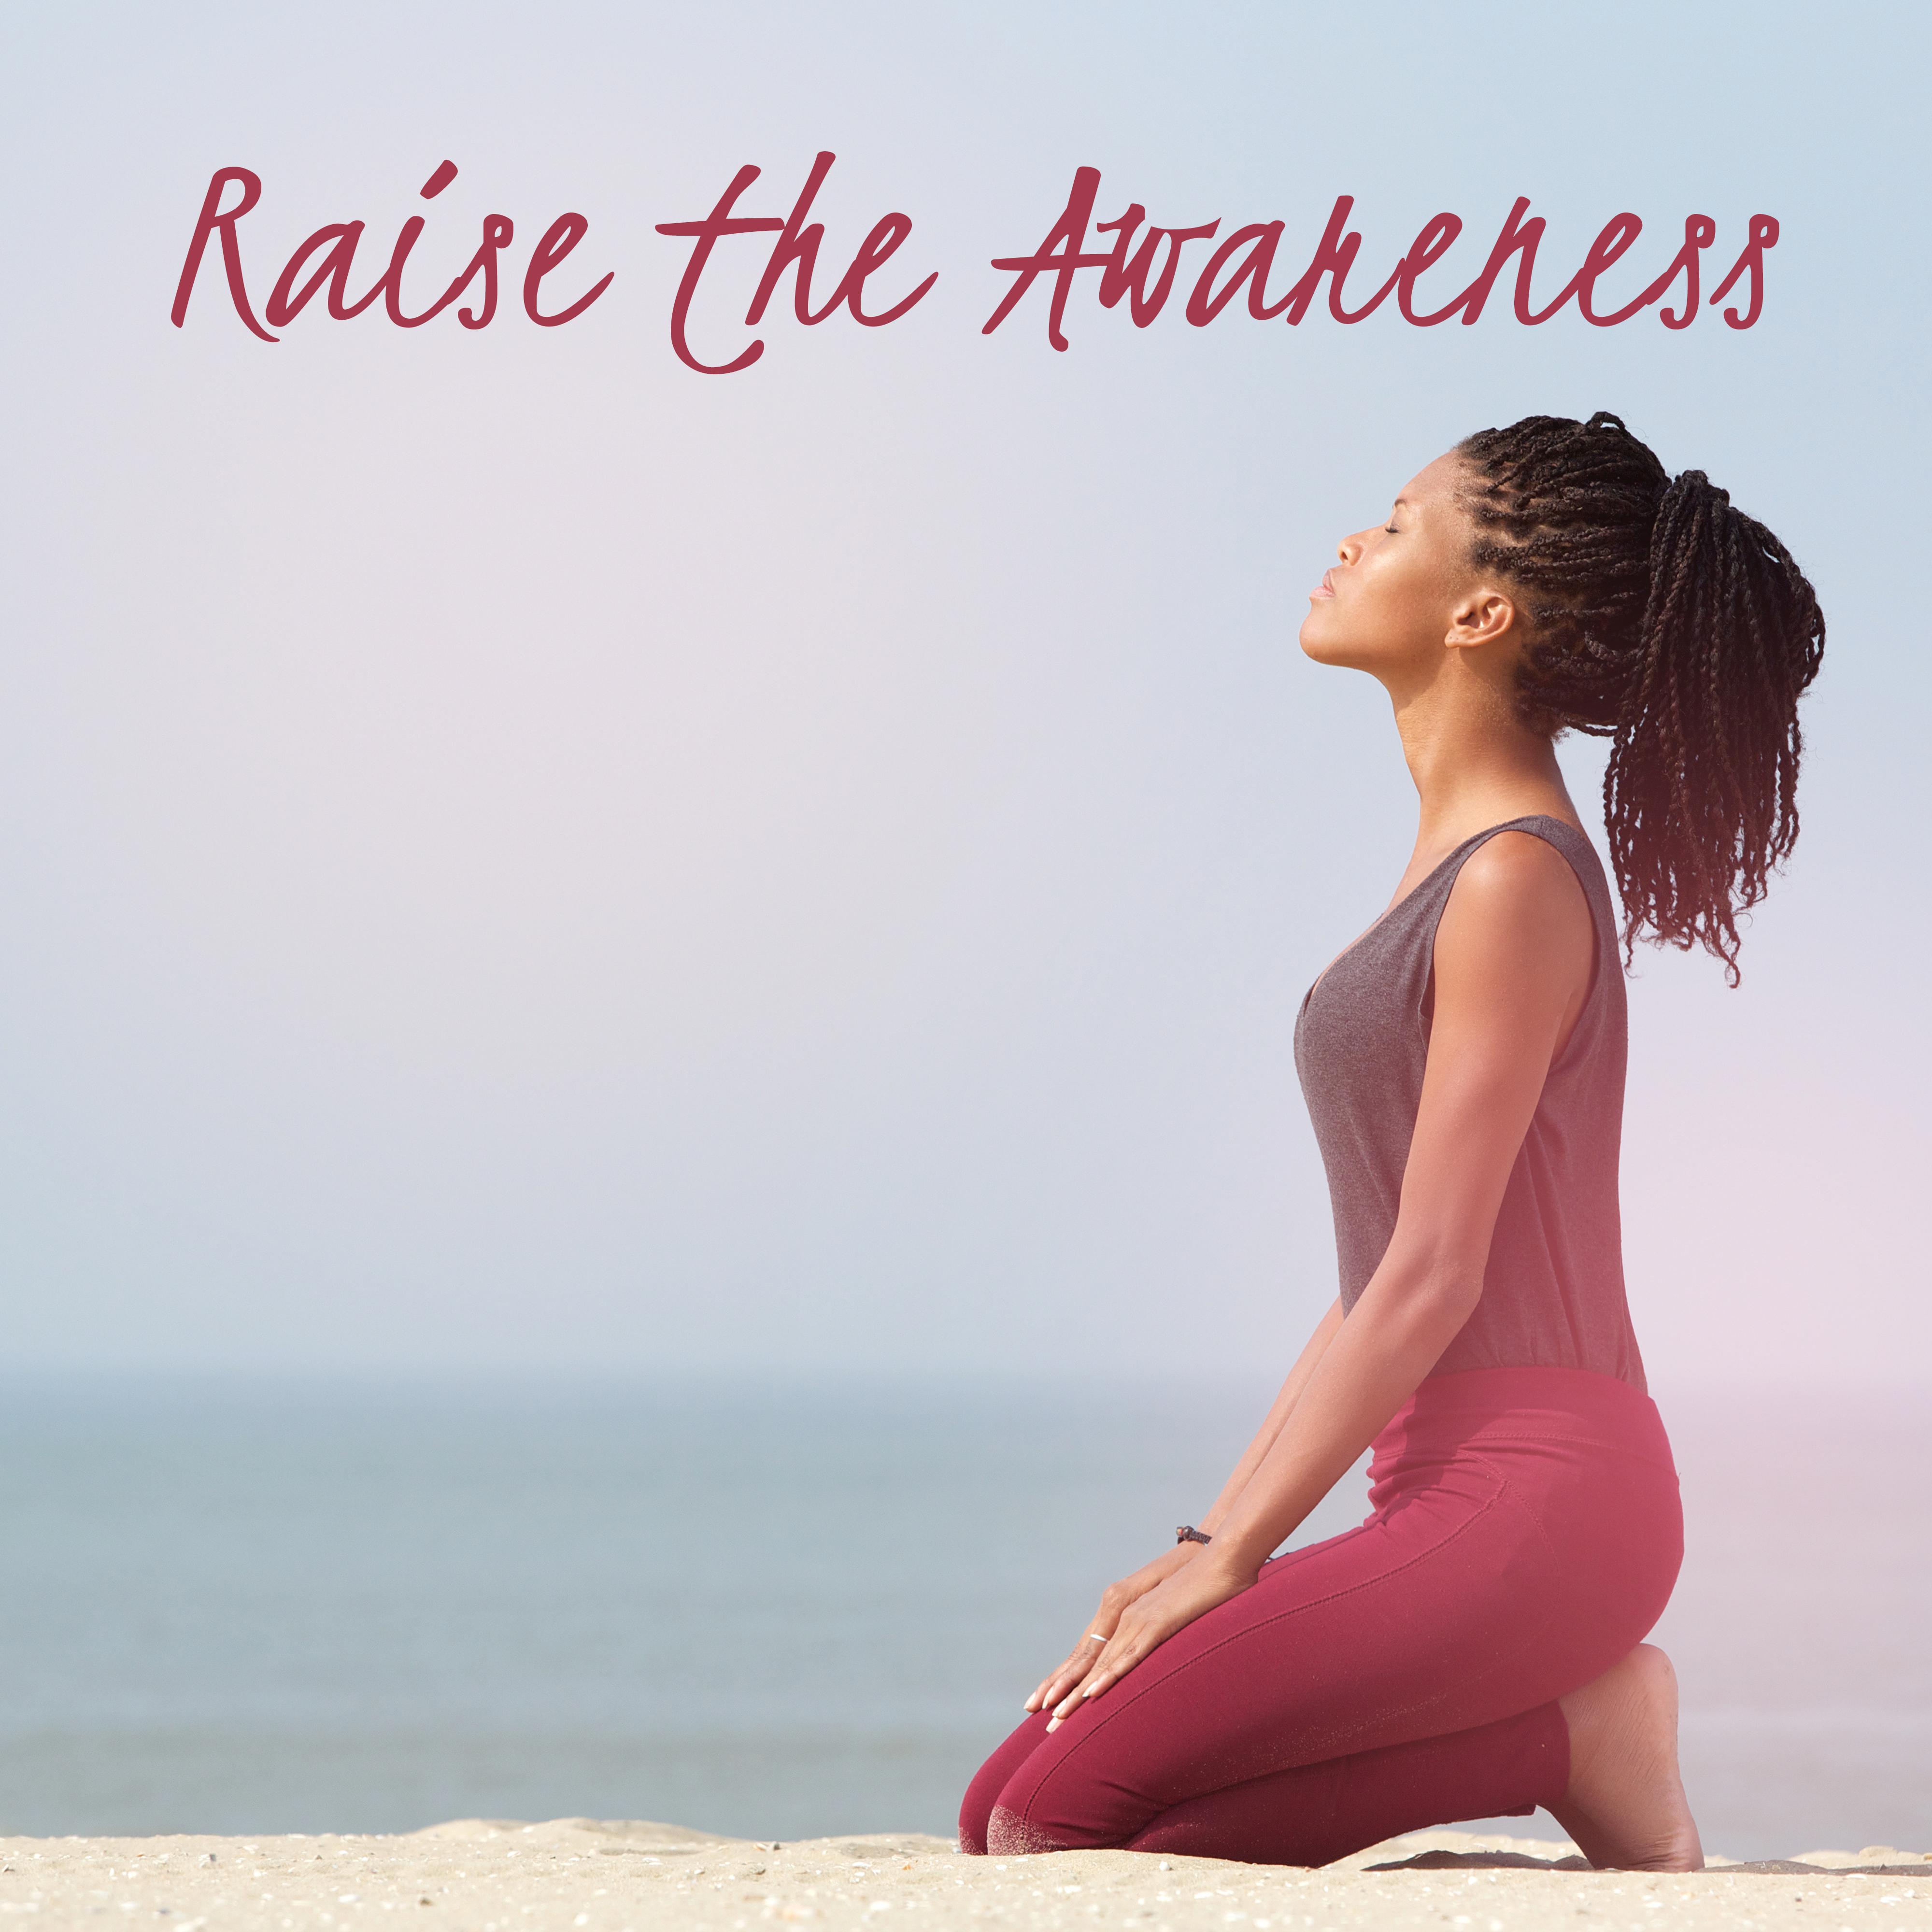 Raise the Awareness: Meditation